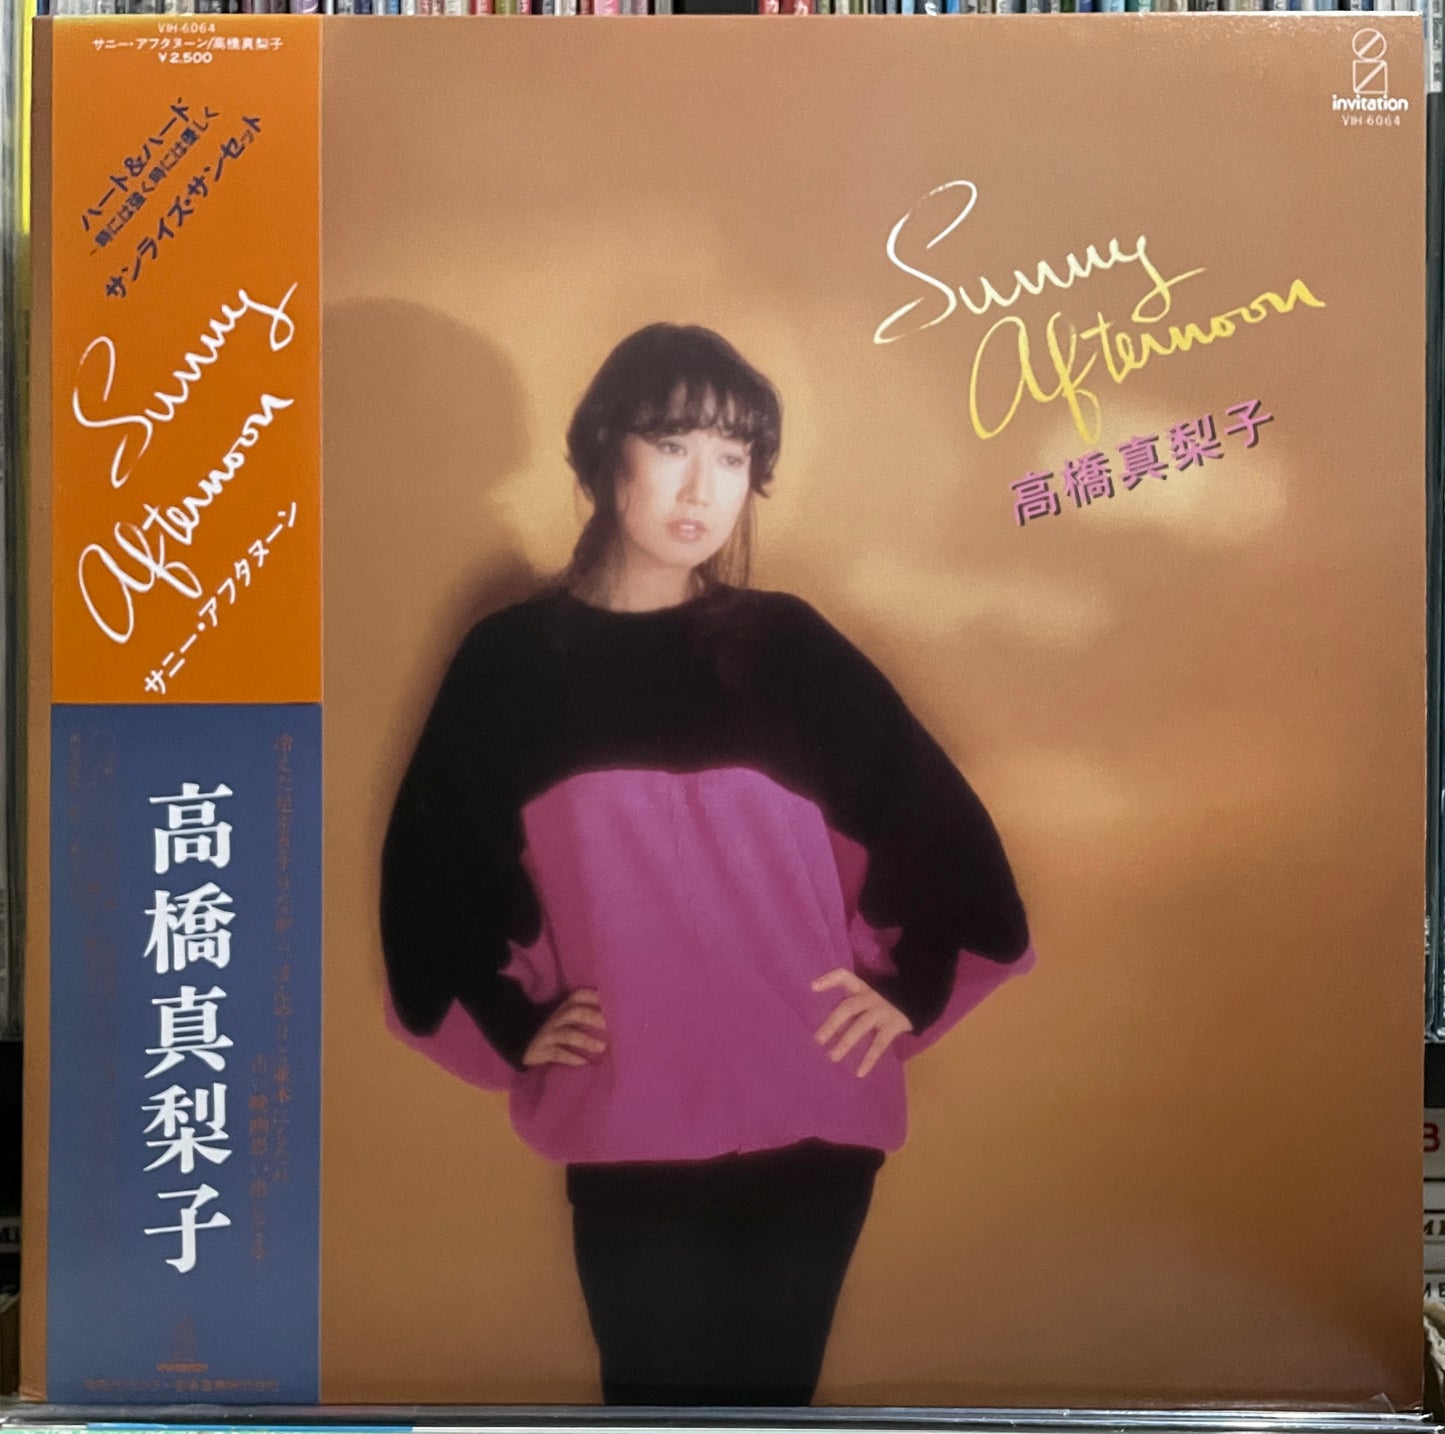 Mariko Takahashi “Sunny Afternoon” (1980)